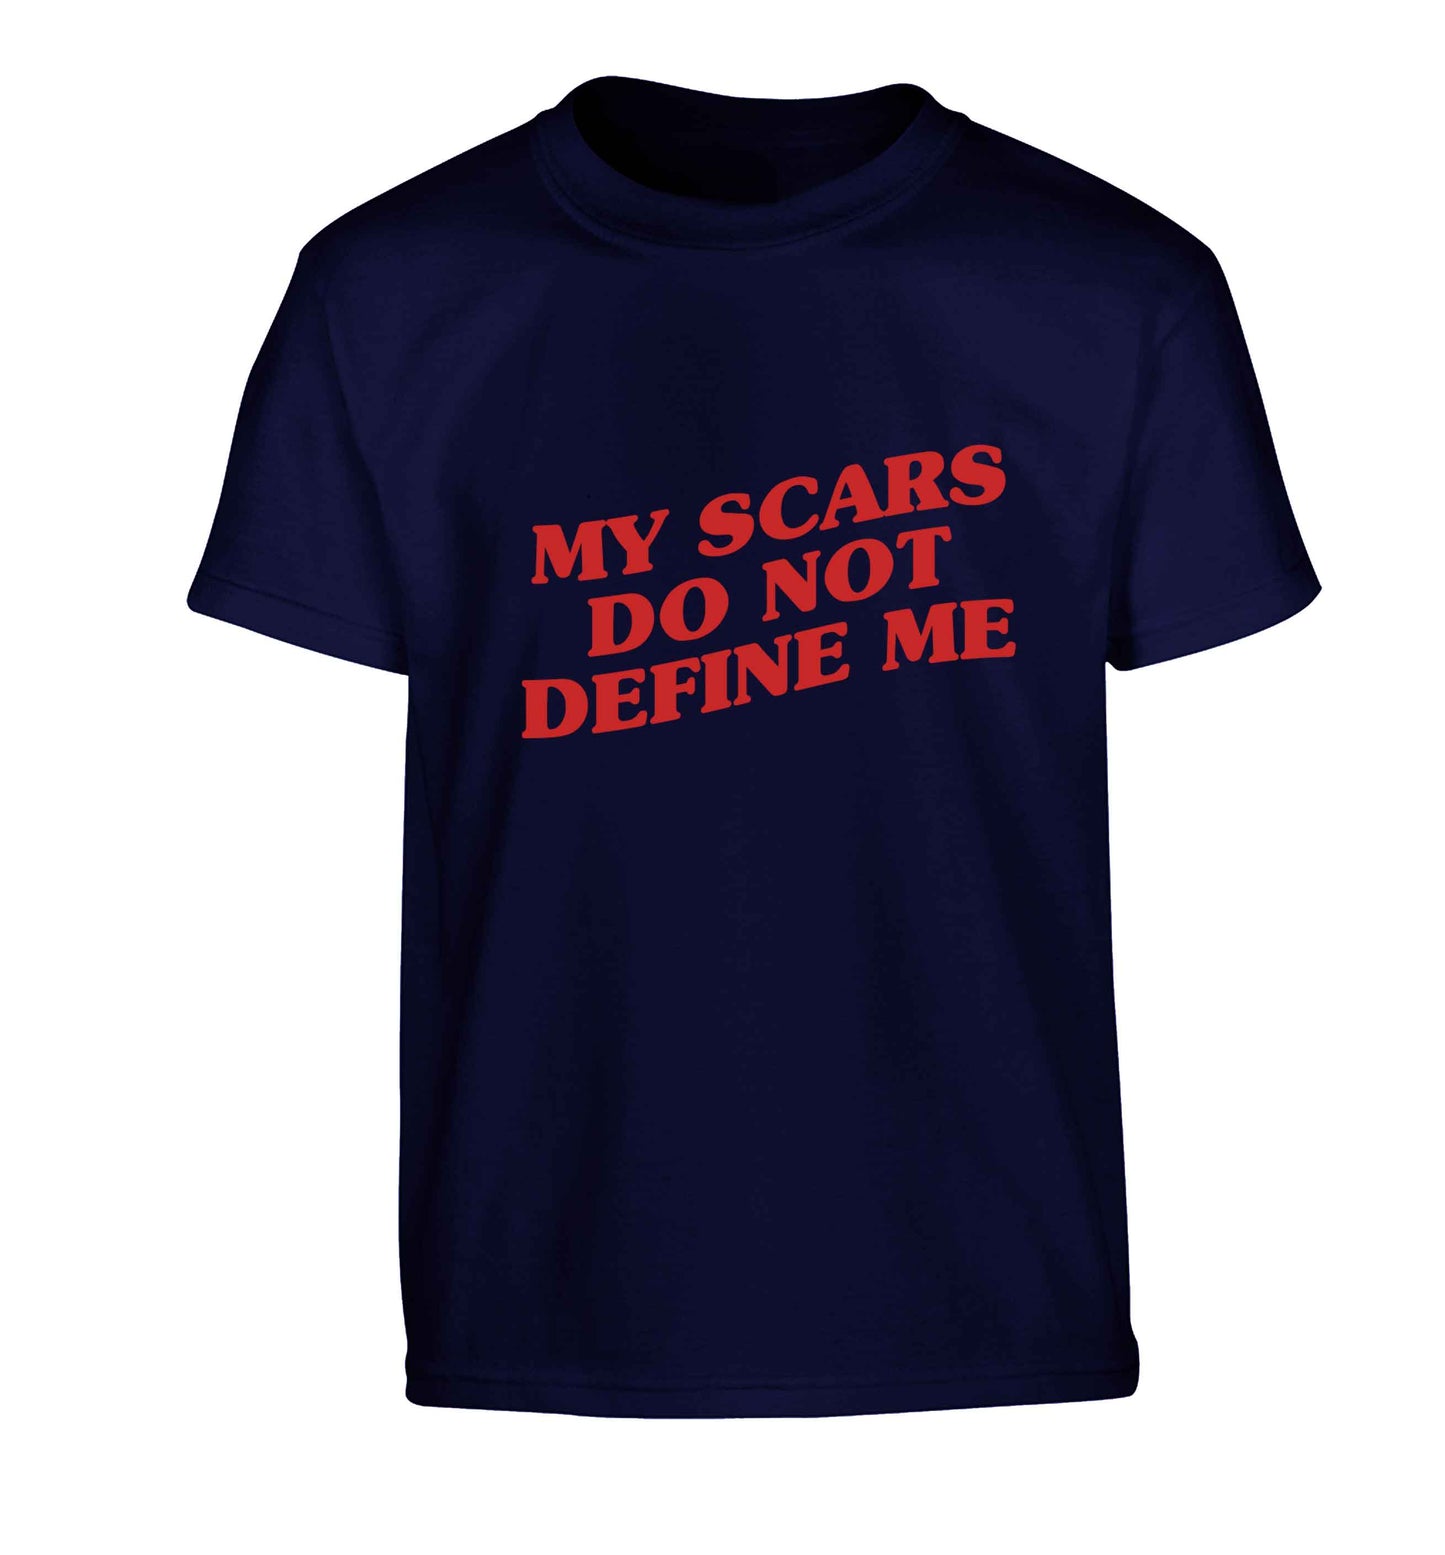 My scars do not define me Children's navy Tshirt 12-13 Years